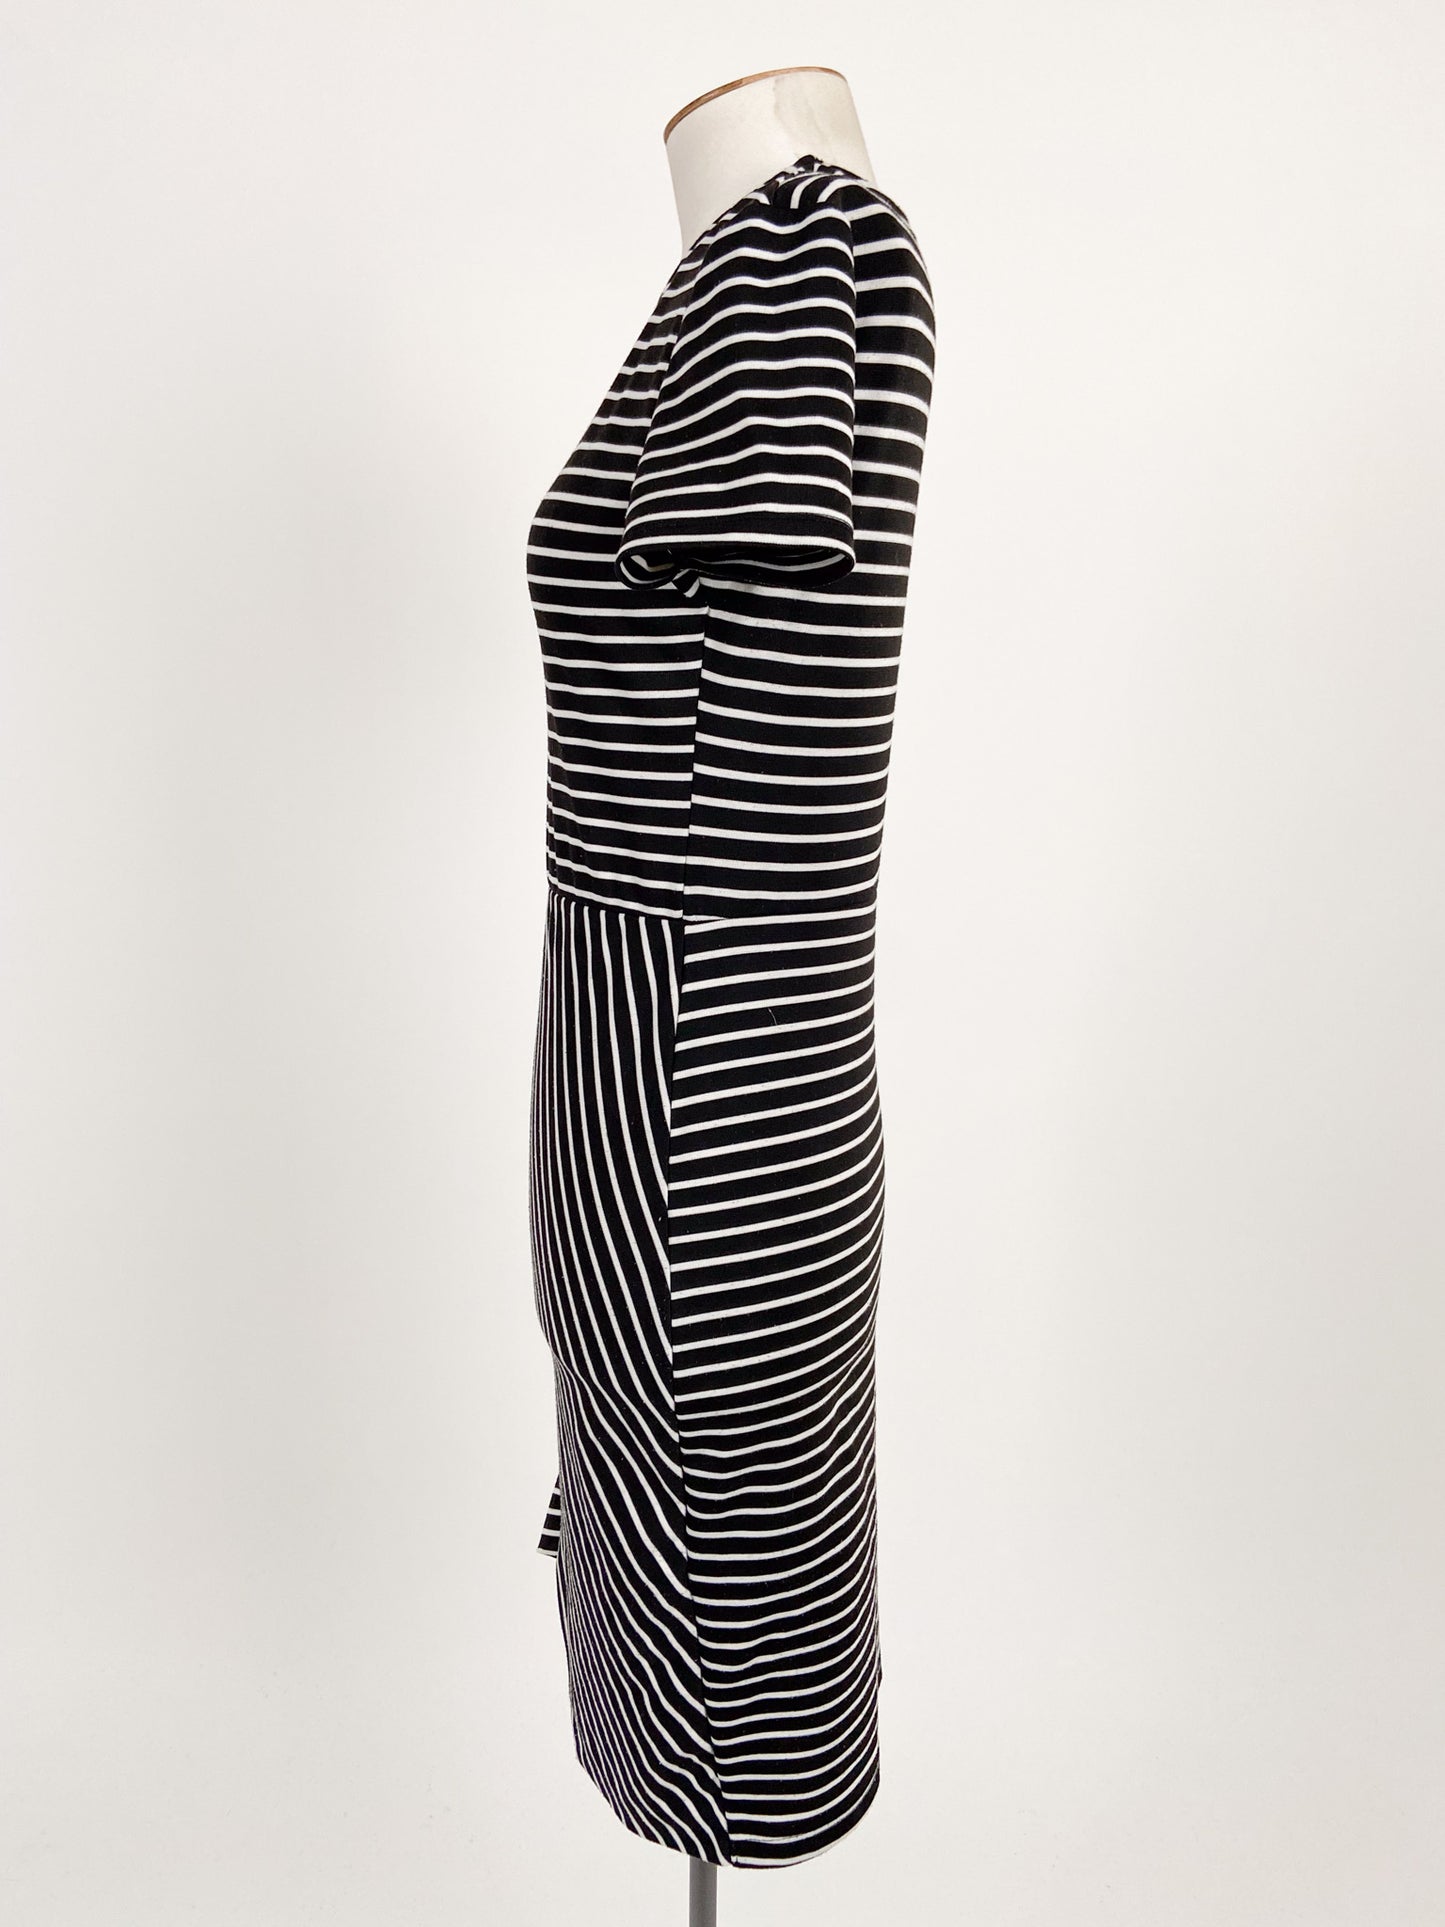 Zara | Multicoloured Casual/Workwear Dress | Size M